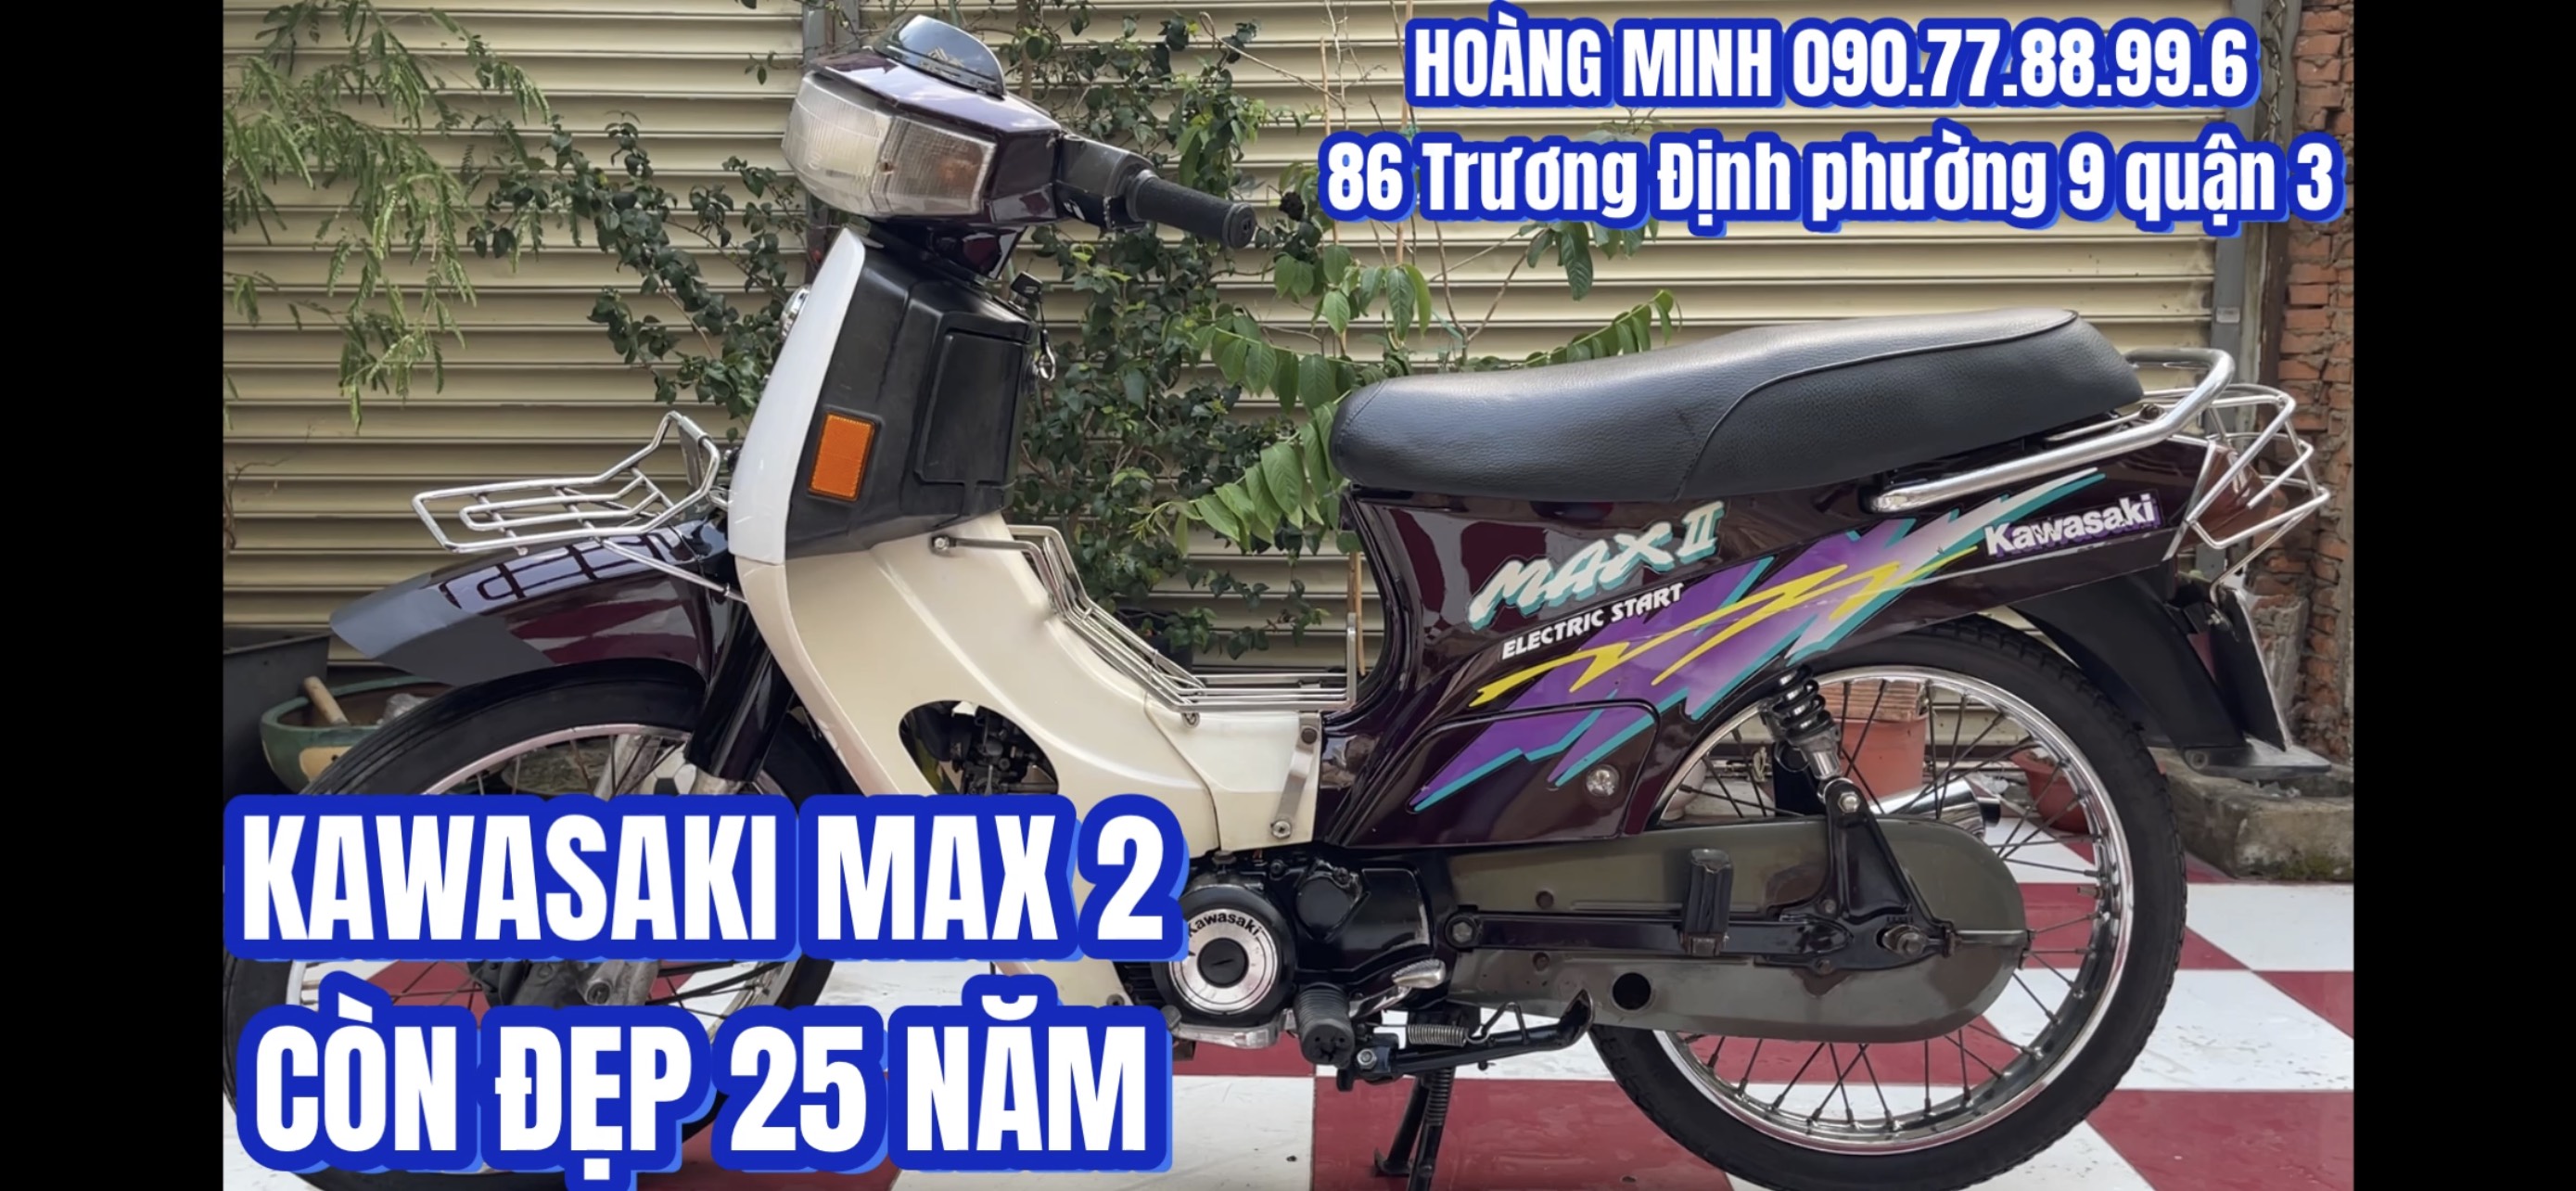 Kawasaki max 2 còn đẹp 25 năm 